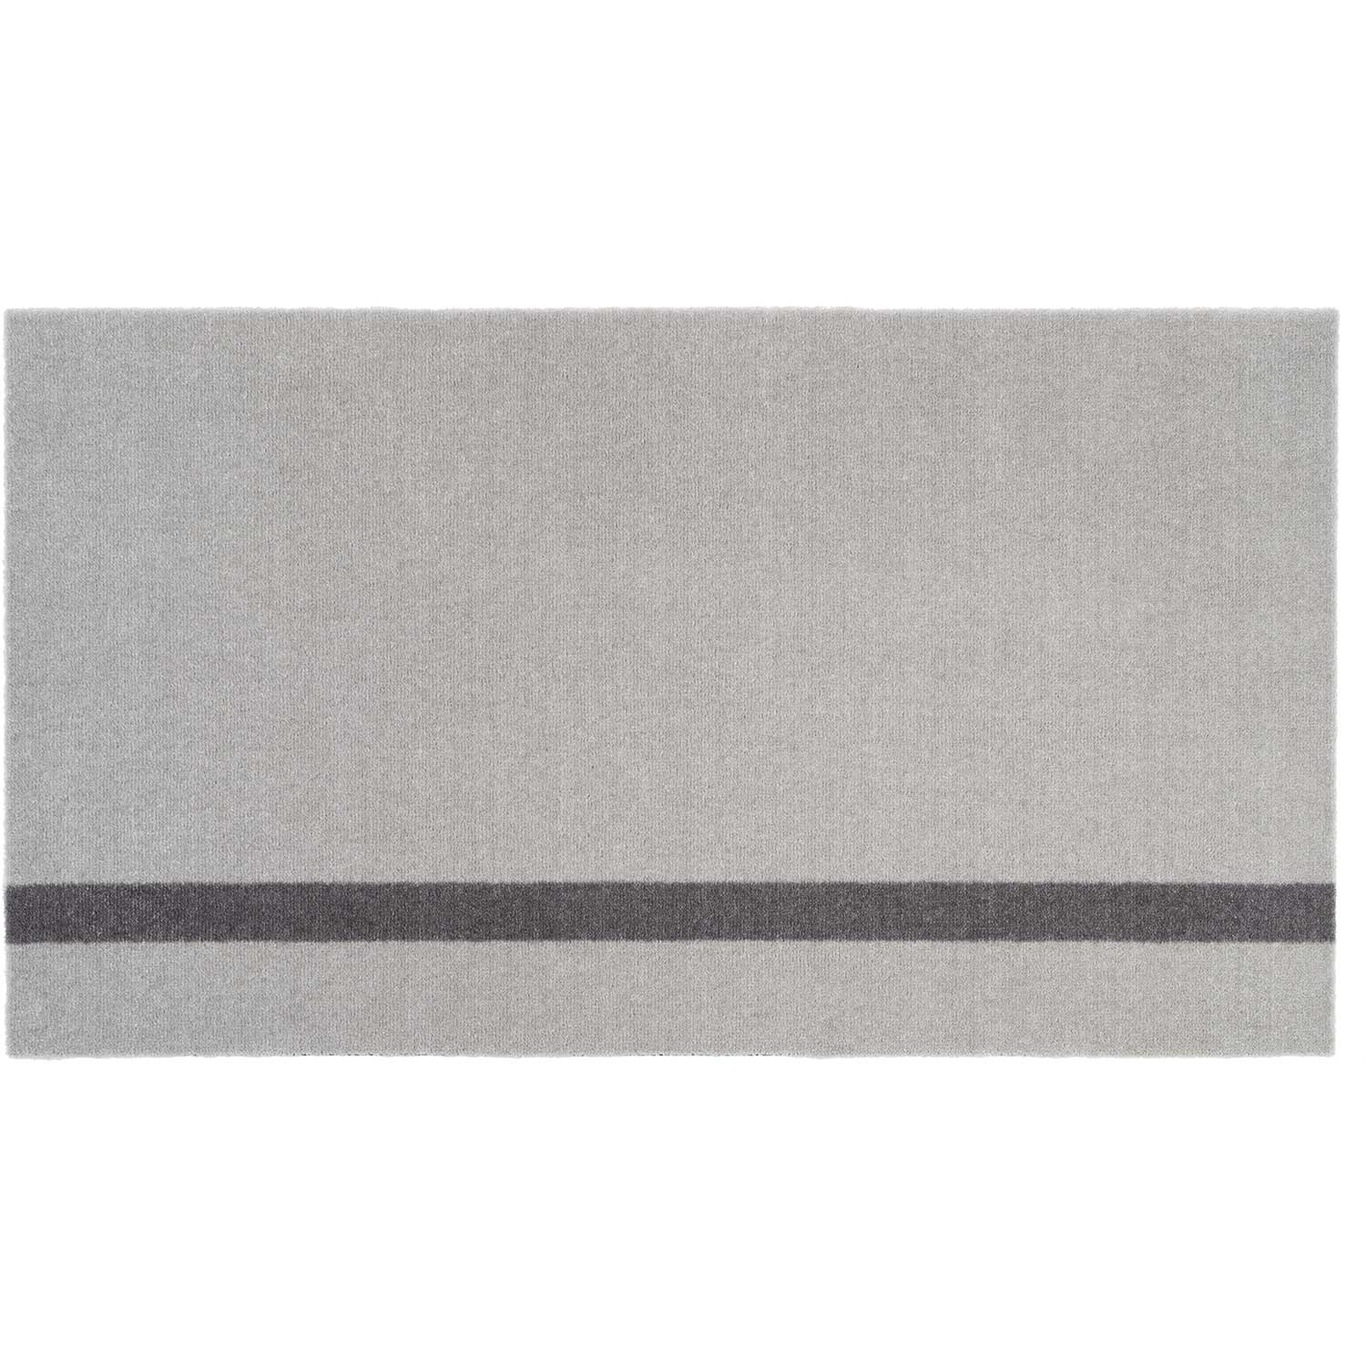 Stripes Vertikal Rug Light Grey / Steel Grey, 67x120 cm